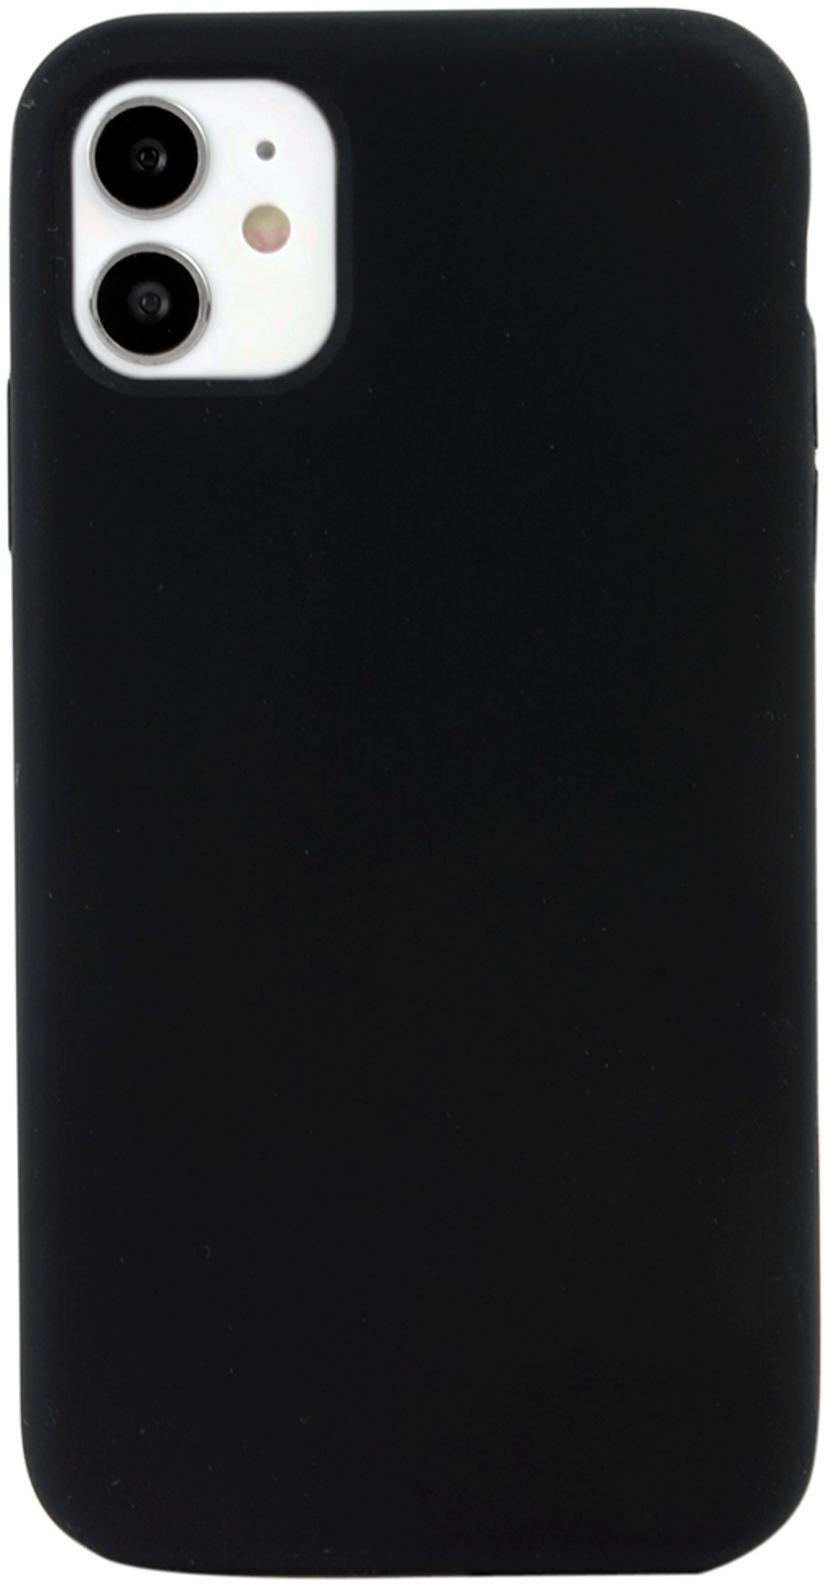 Cirafon Silicone Case For Iphone 11 Black iPhone 11 Svart